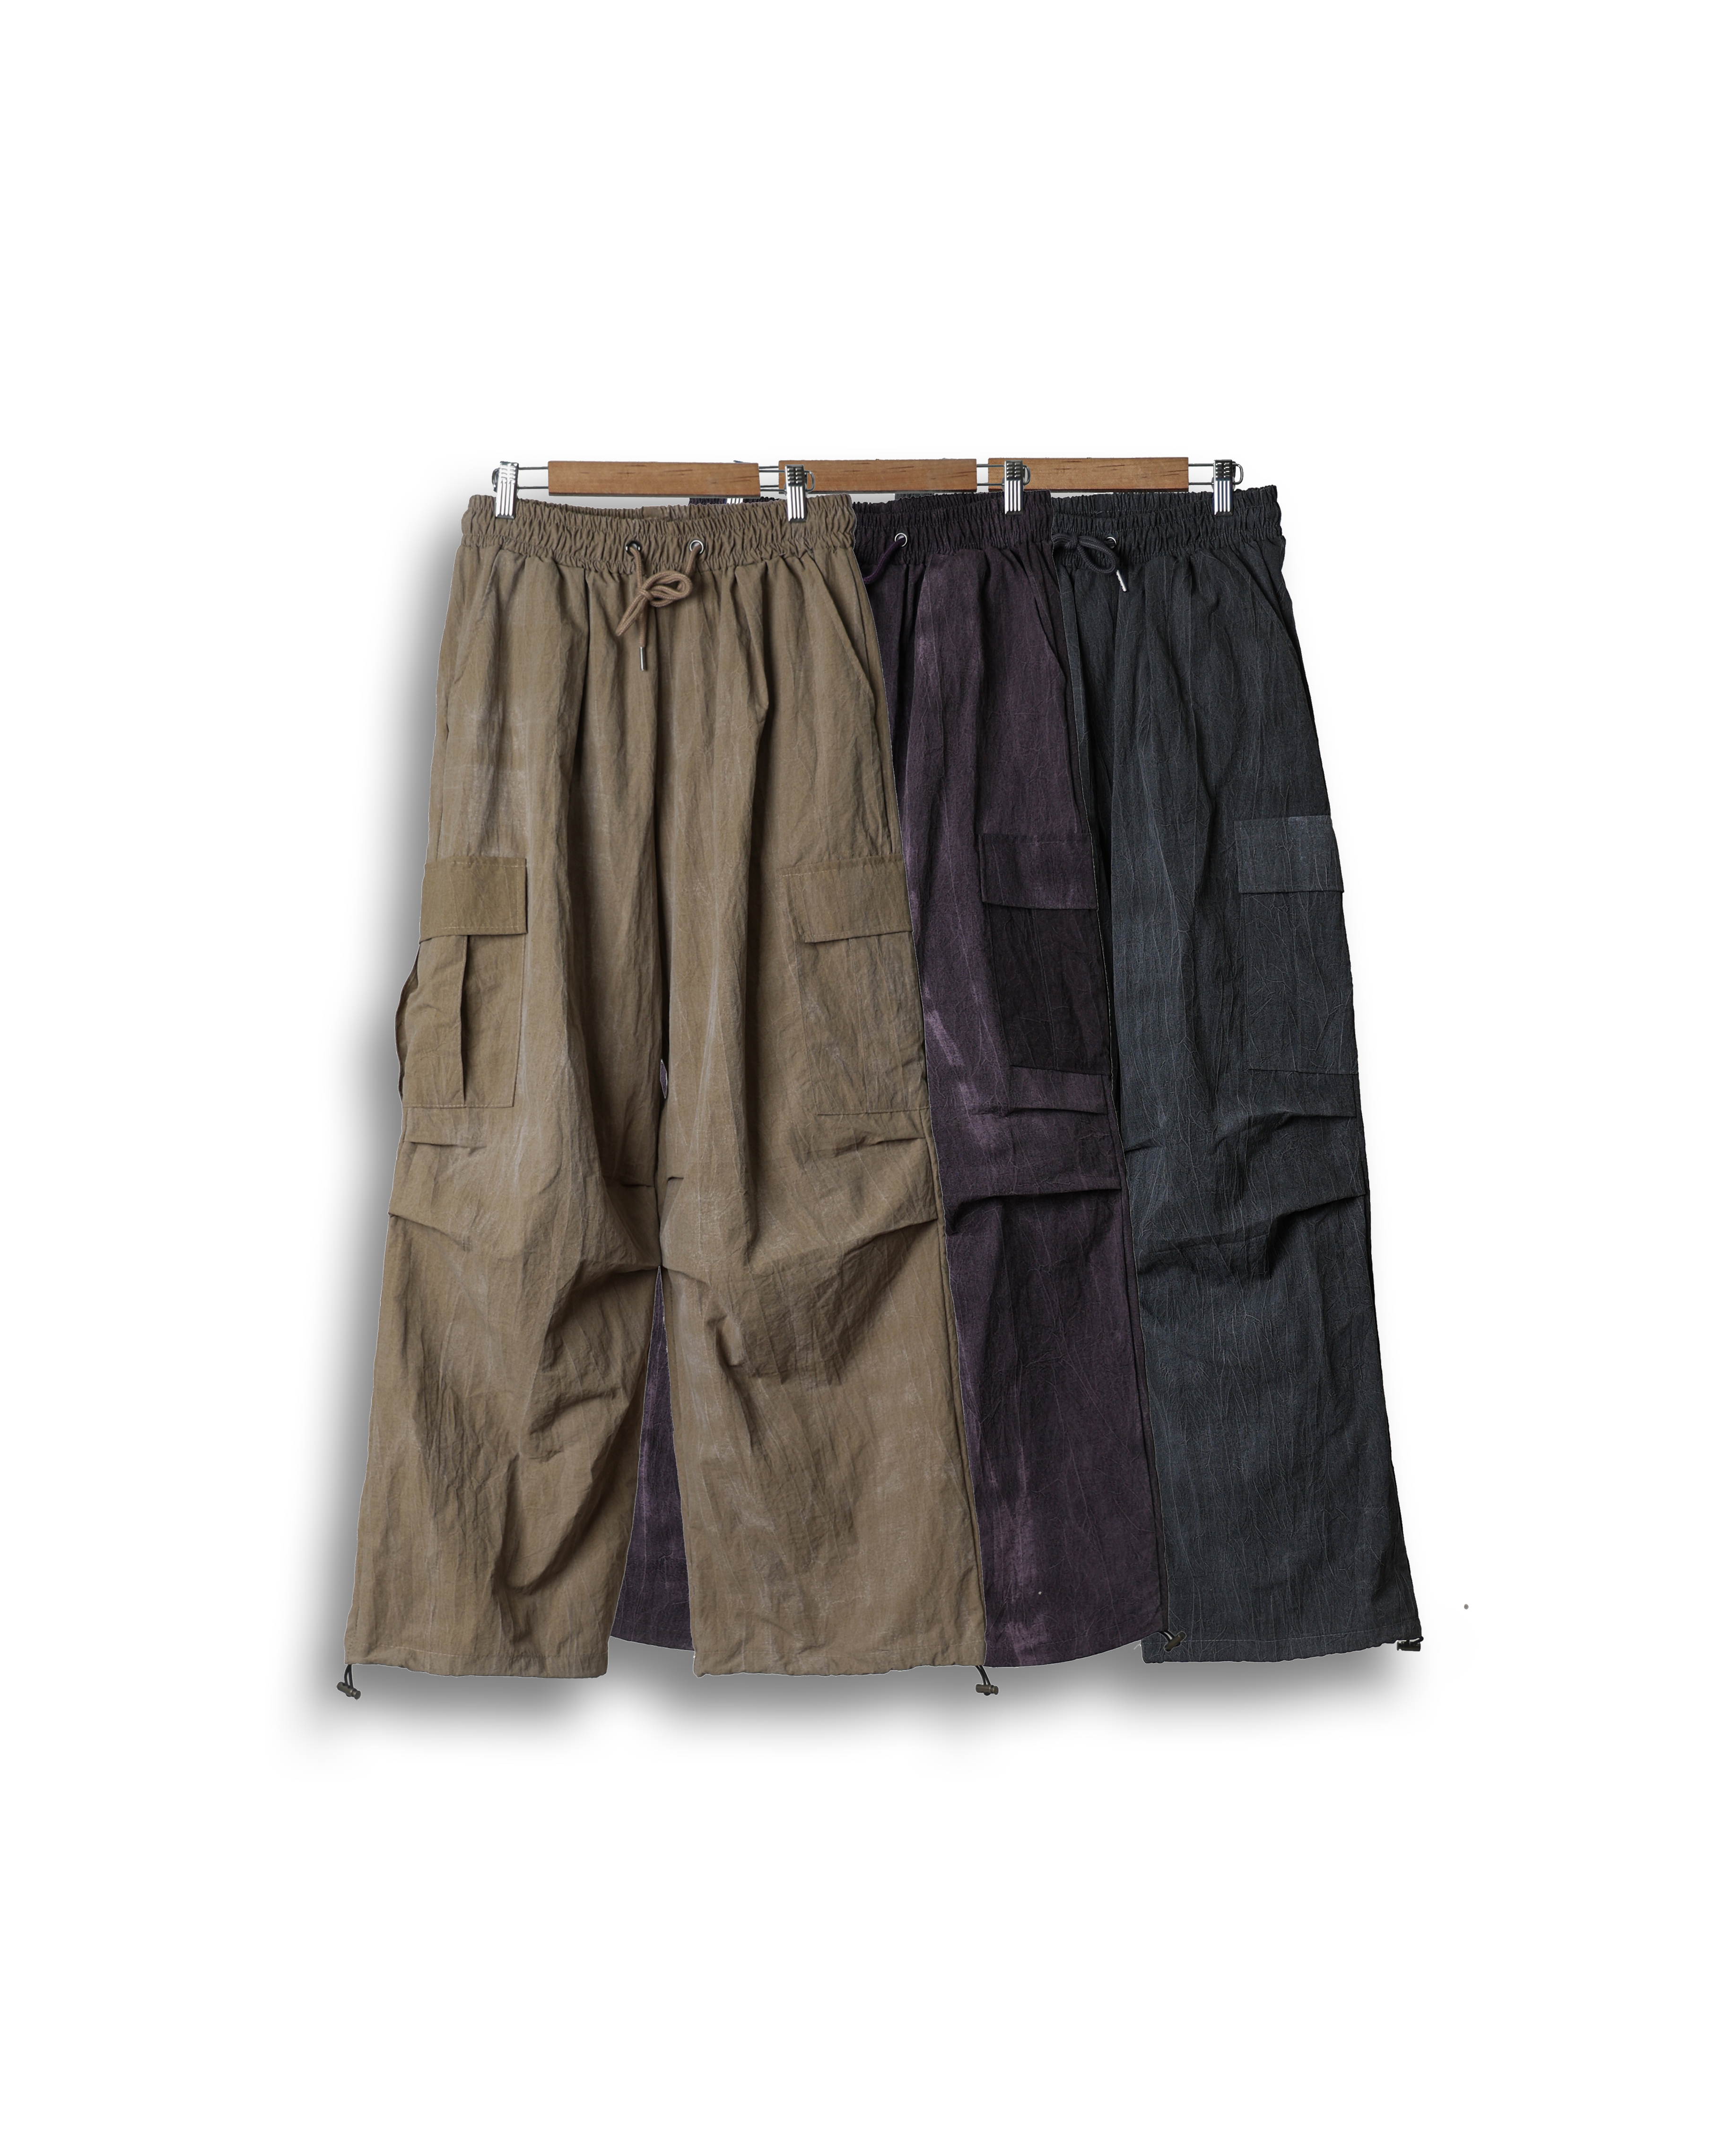 SHIN Crack Washed Parachute Pants (Charcoal/Purple/Beige)